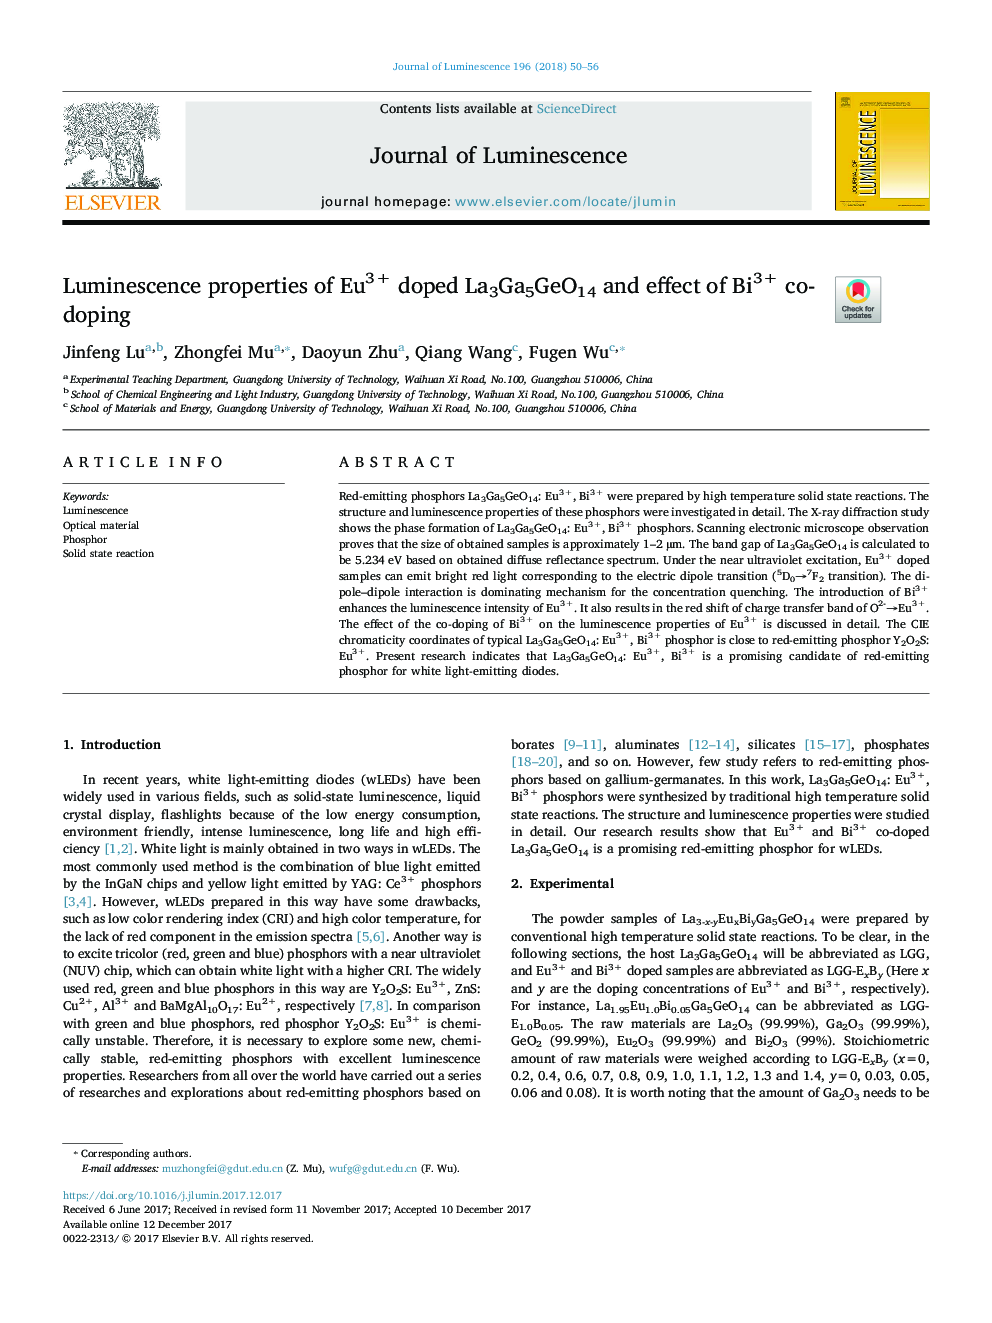 Luminescence properties of Eu3+ doped La3Ga5GeO14 and effect of Bi3+ co-doping